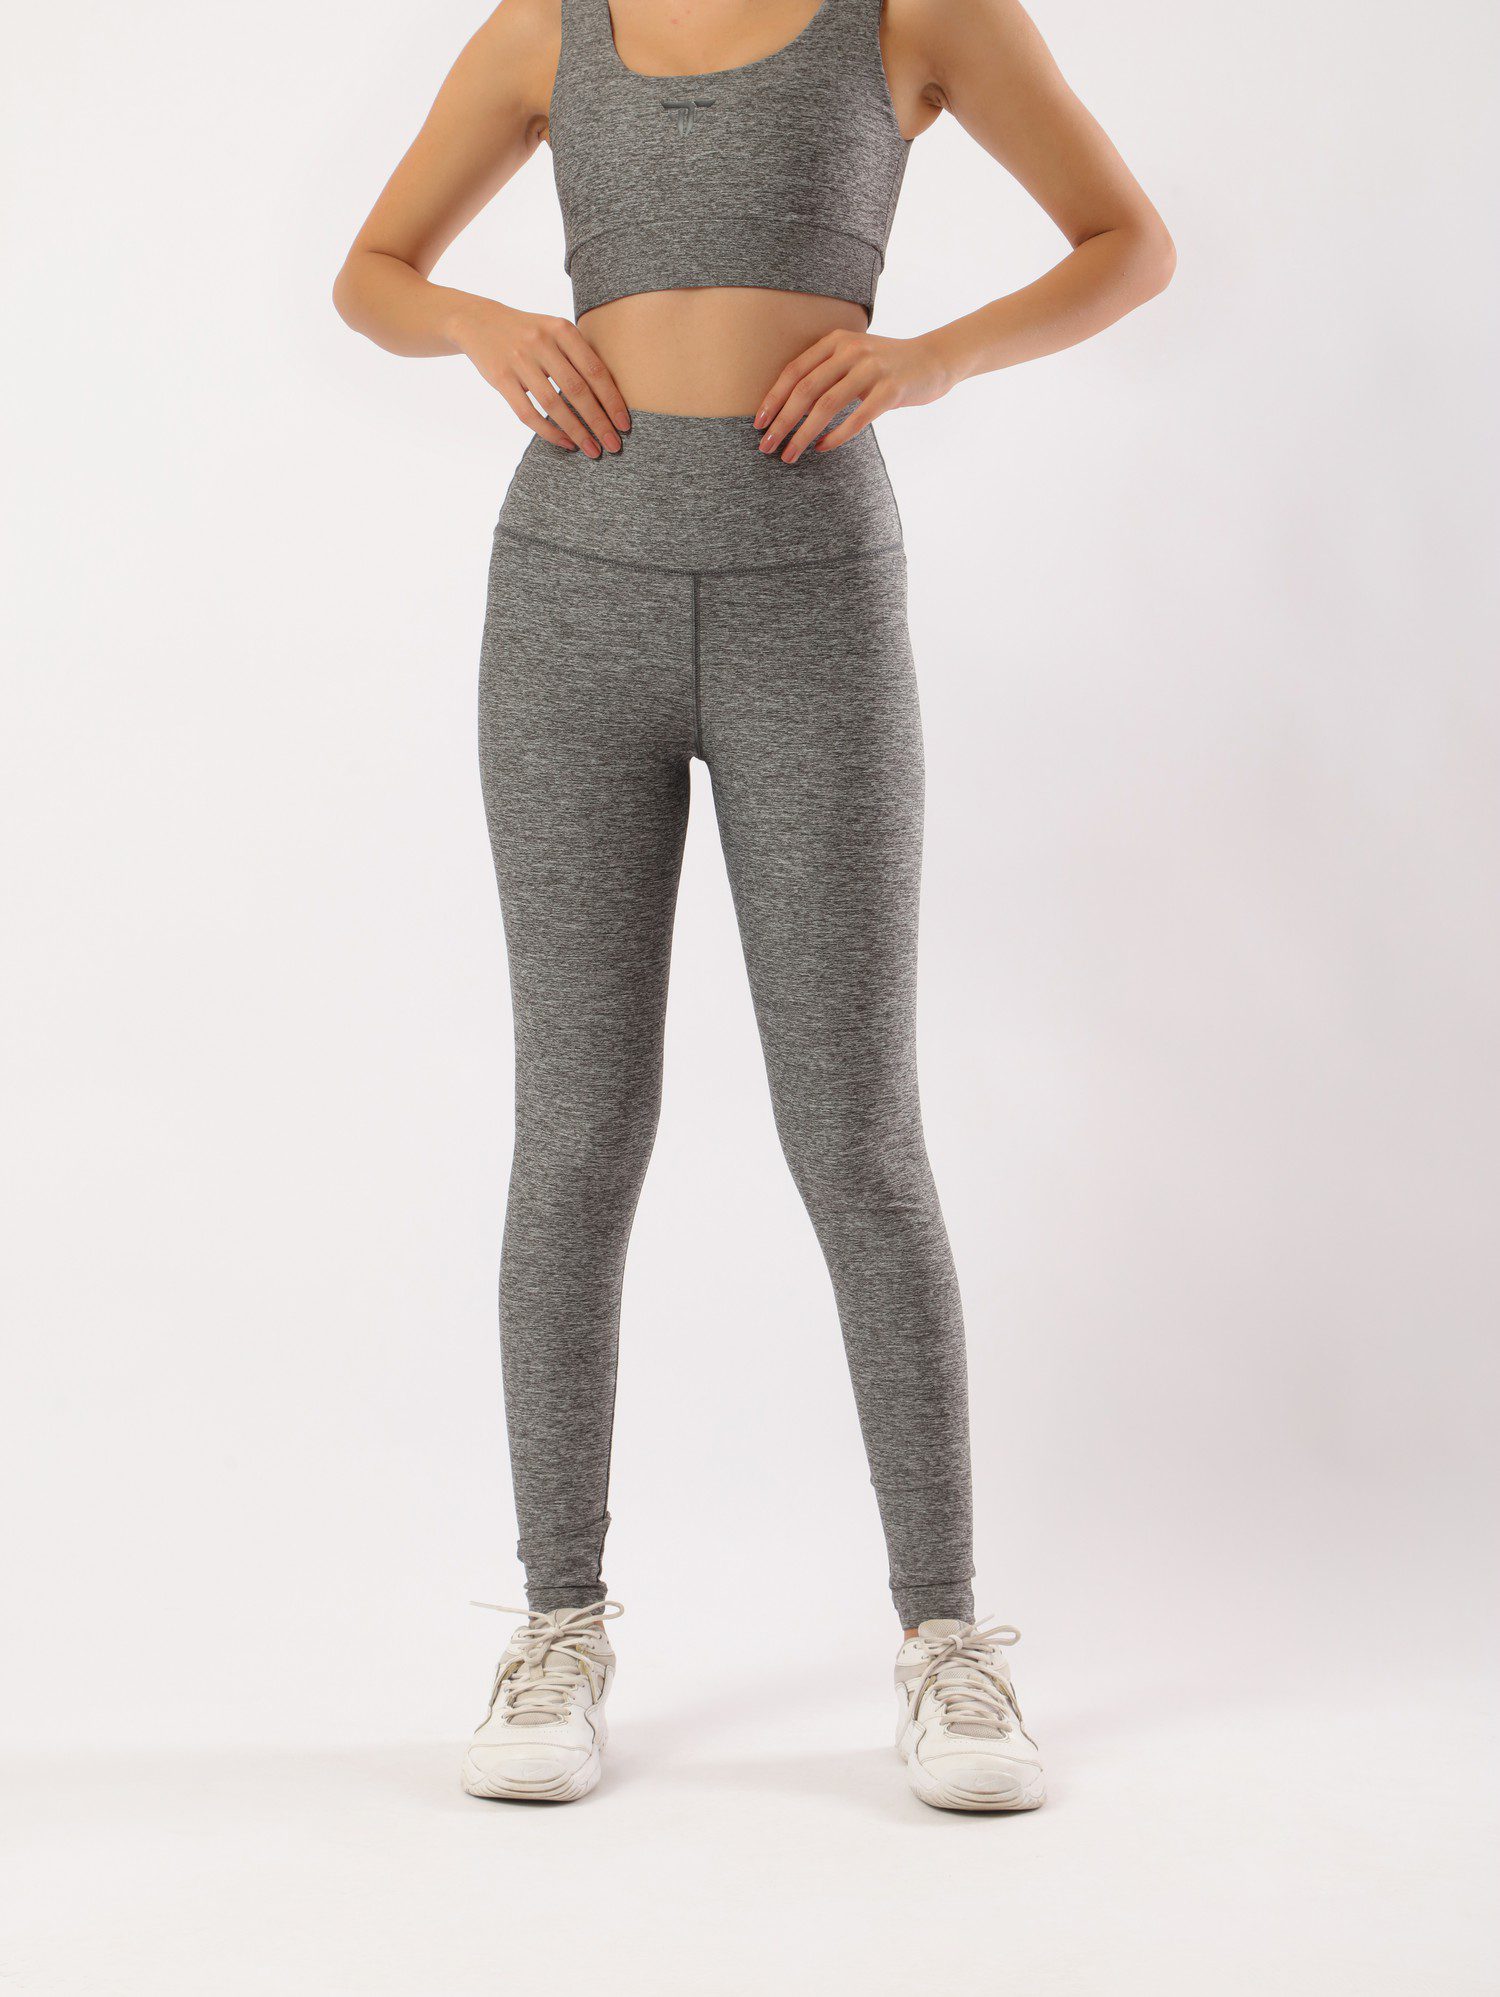 Ash grey heather yoga flare pants – Fit Freak